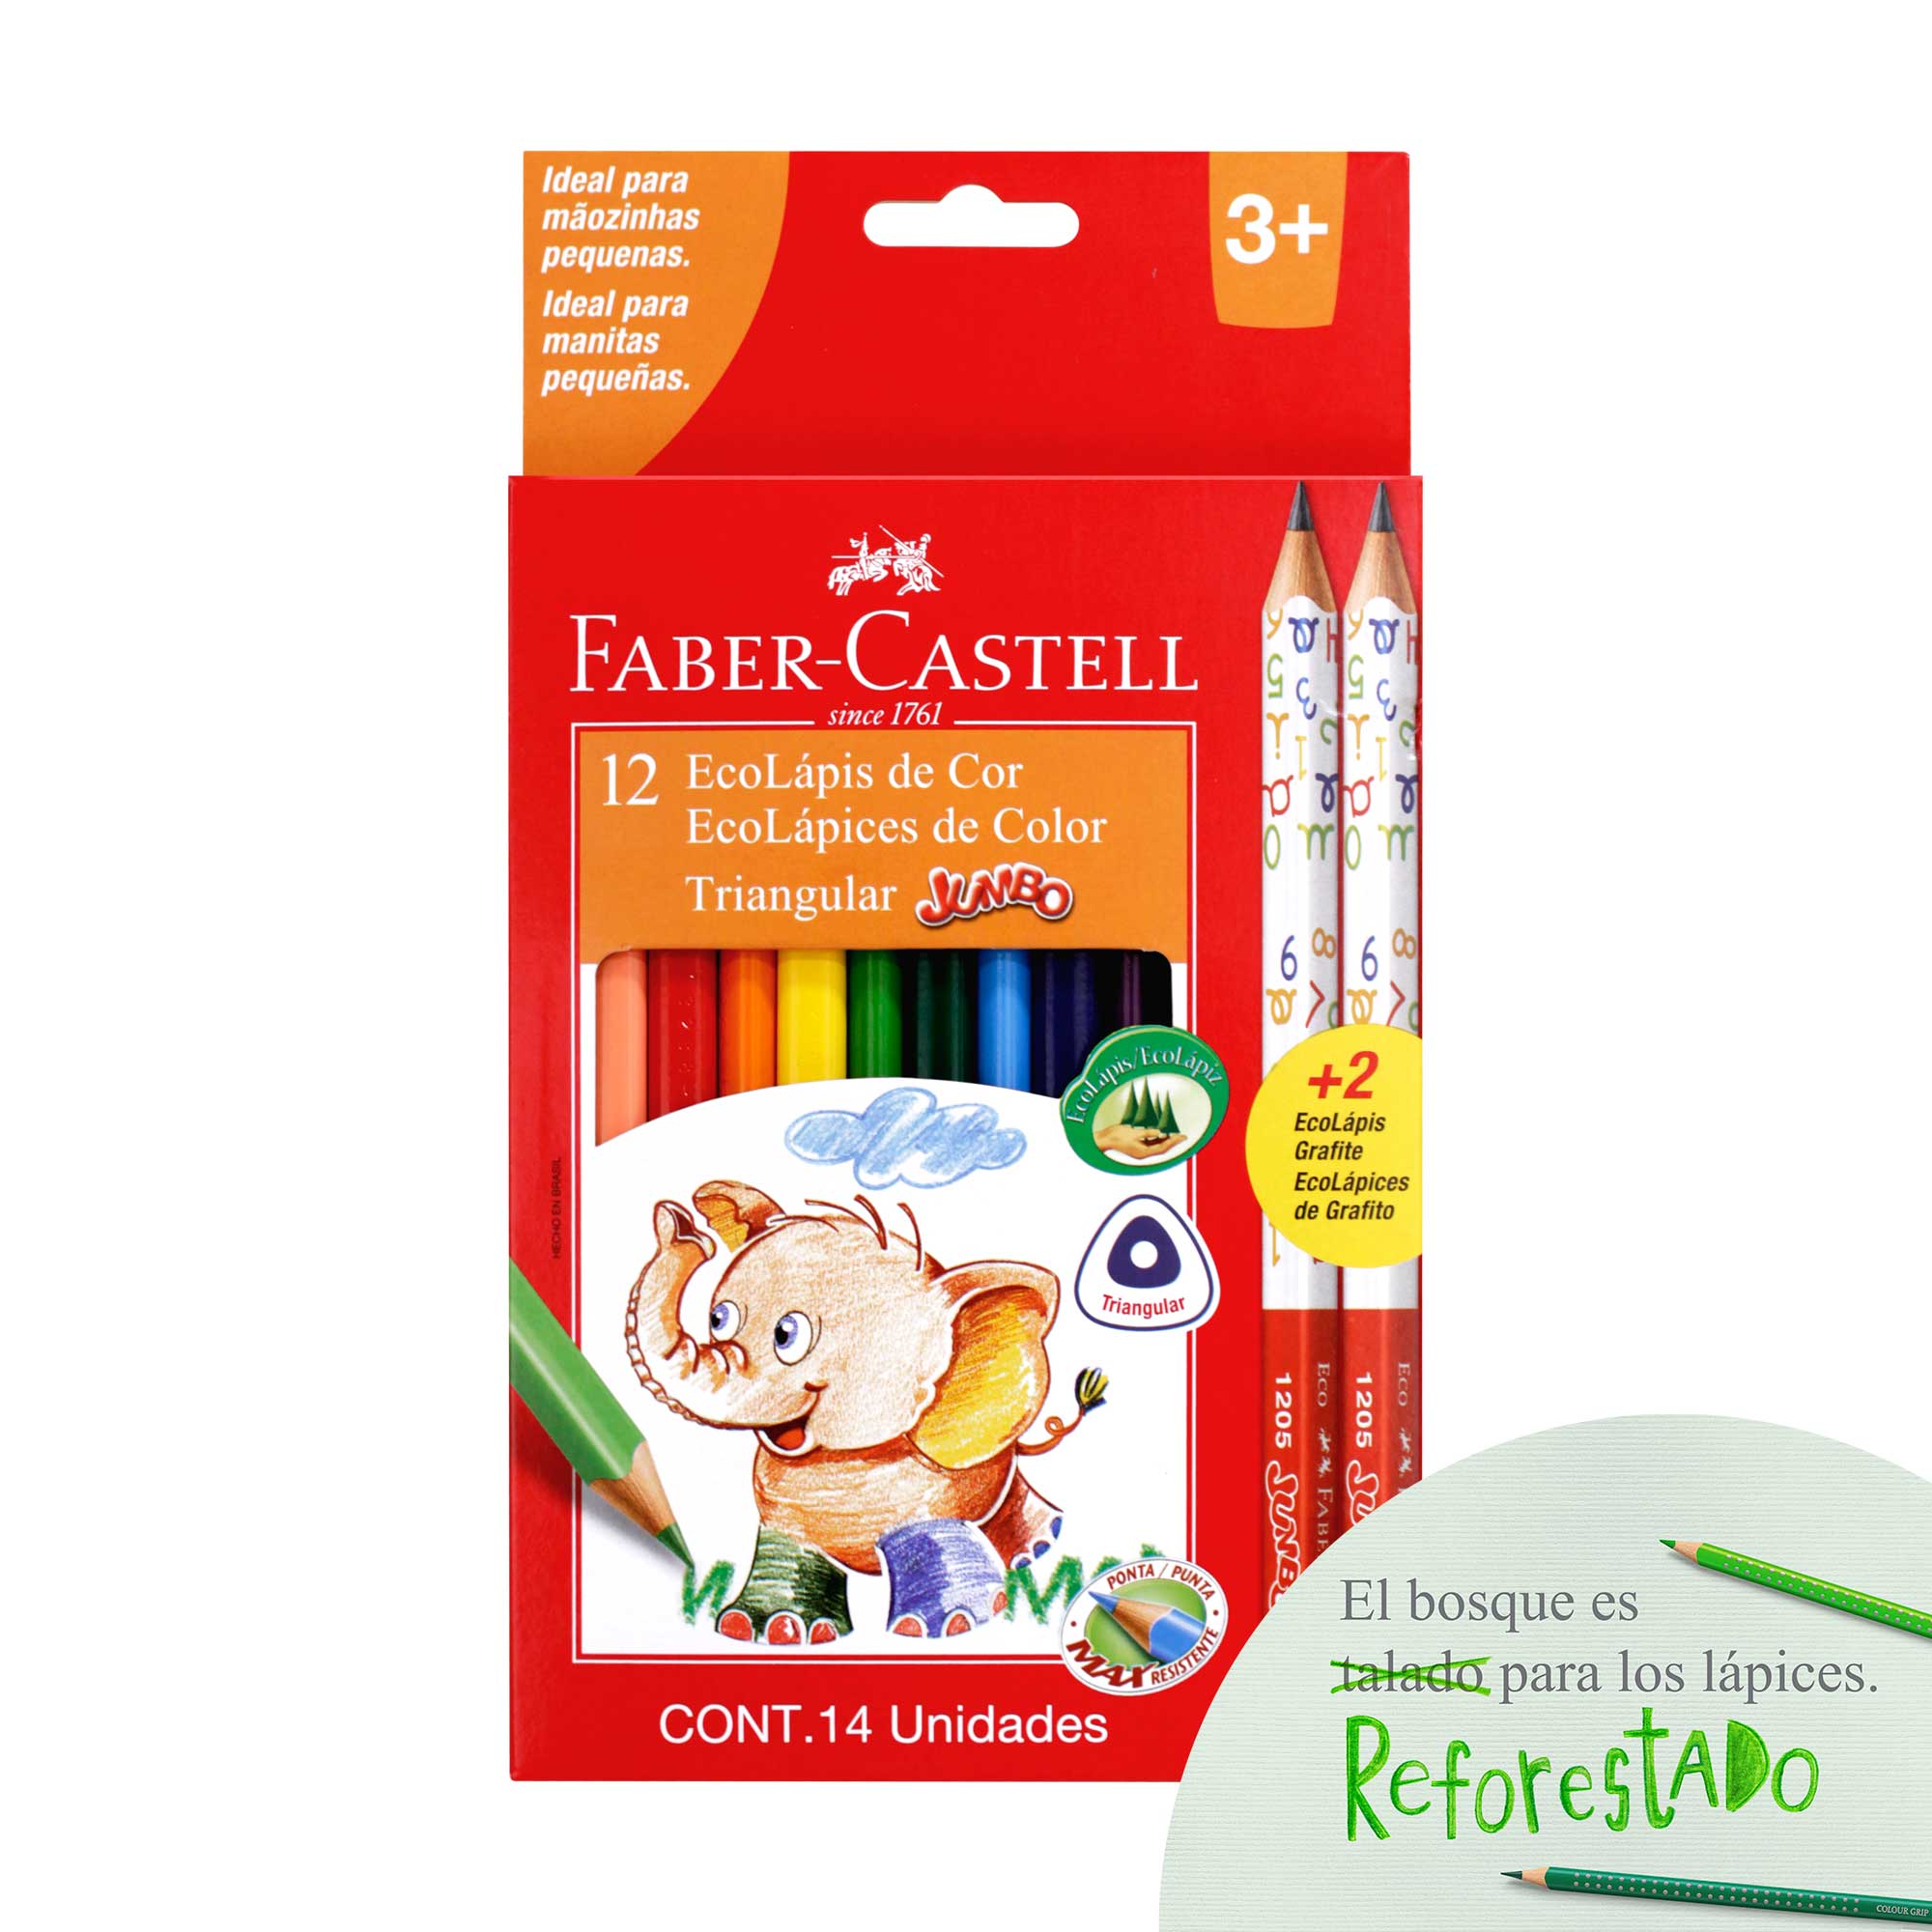 Colores Faber-Castell Ecolápices SuperSoft x 12 + 2 Ecolápices de Grafito